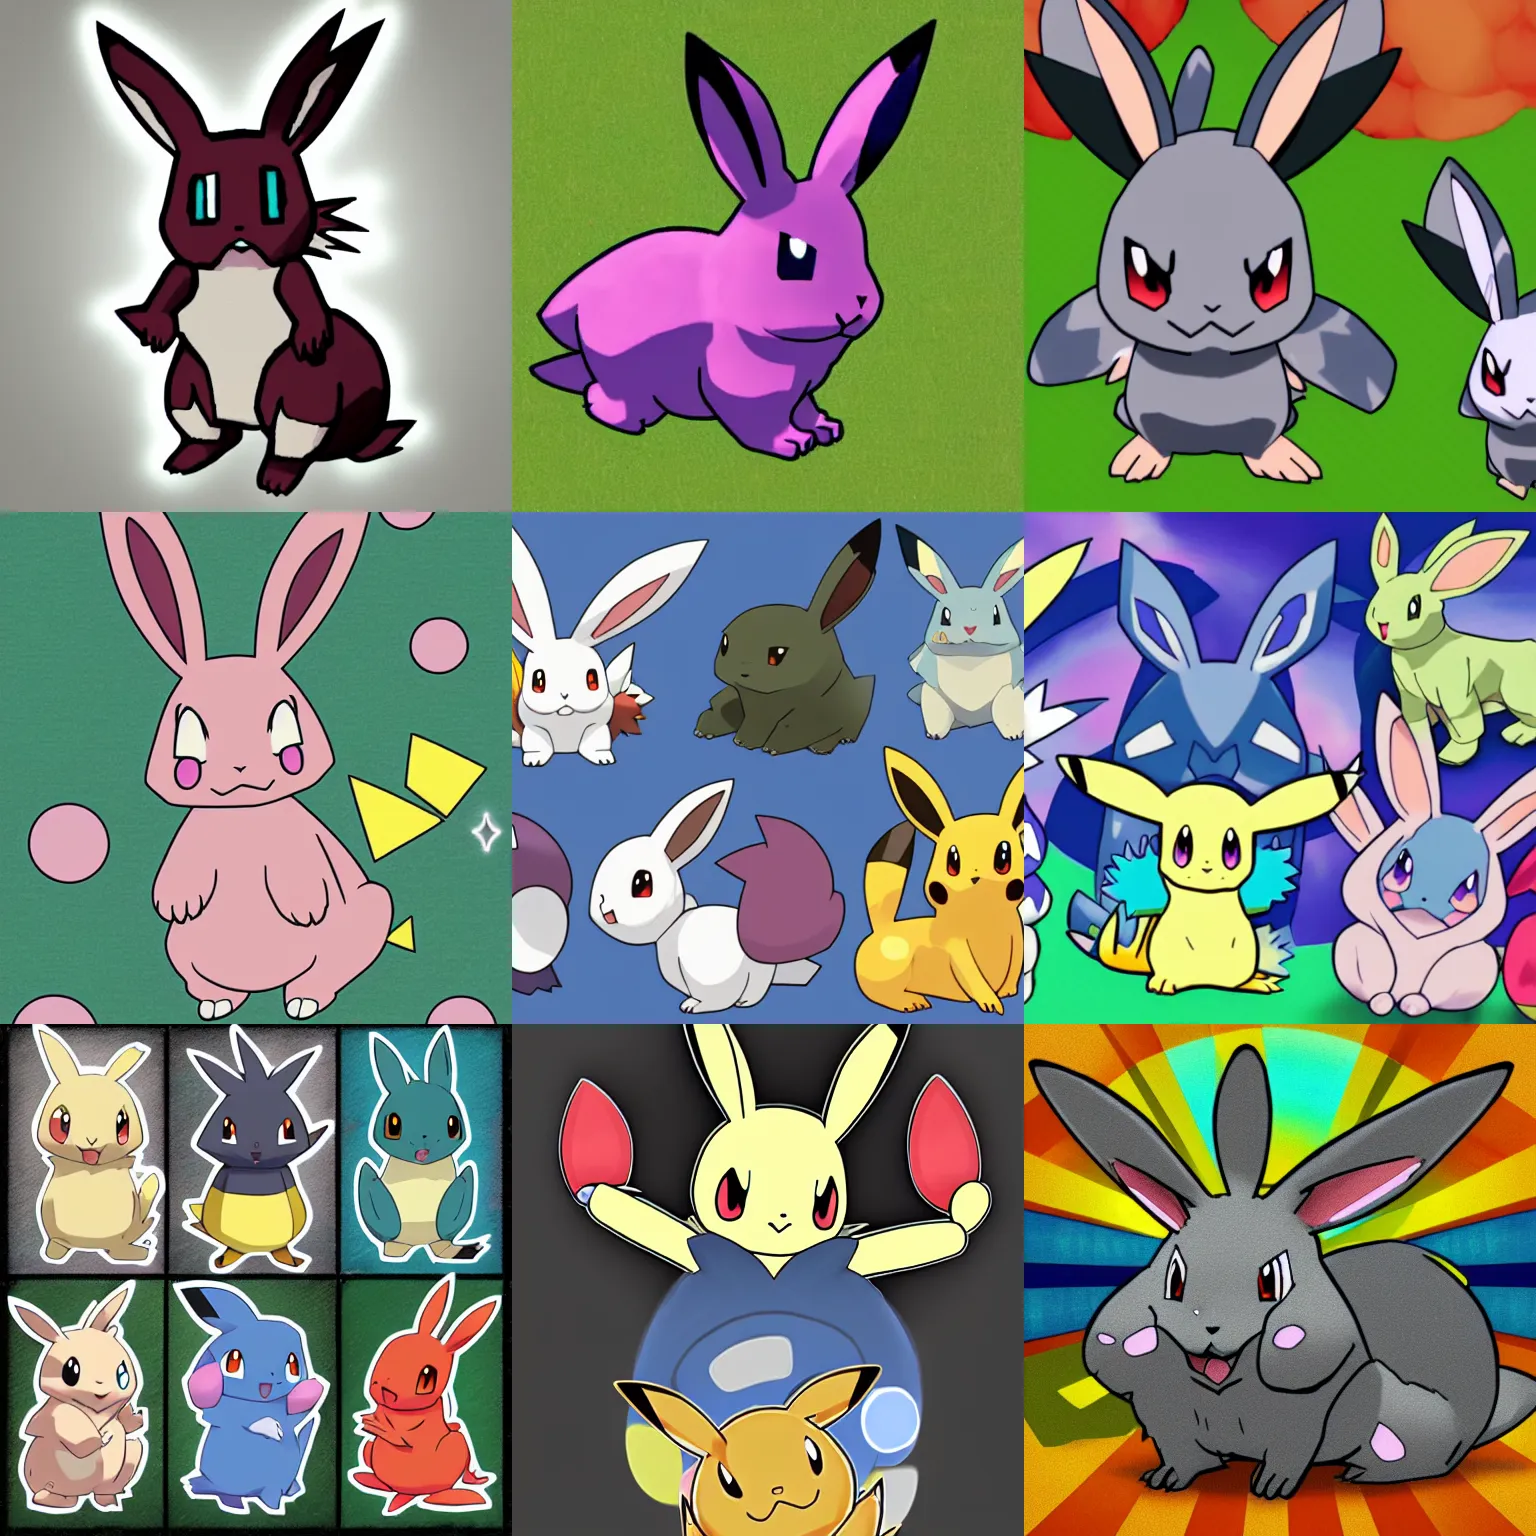 Prompt: Pokemon gen 3 rabbit